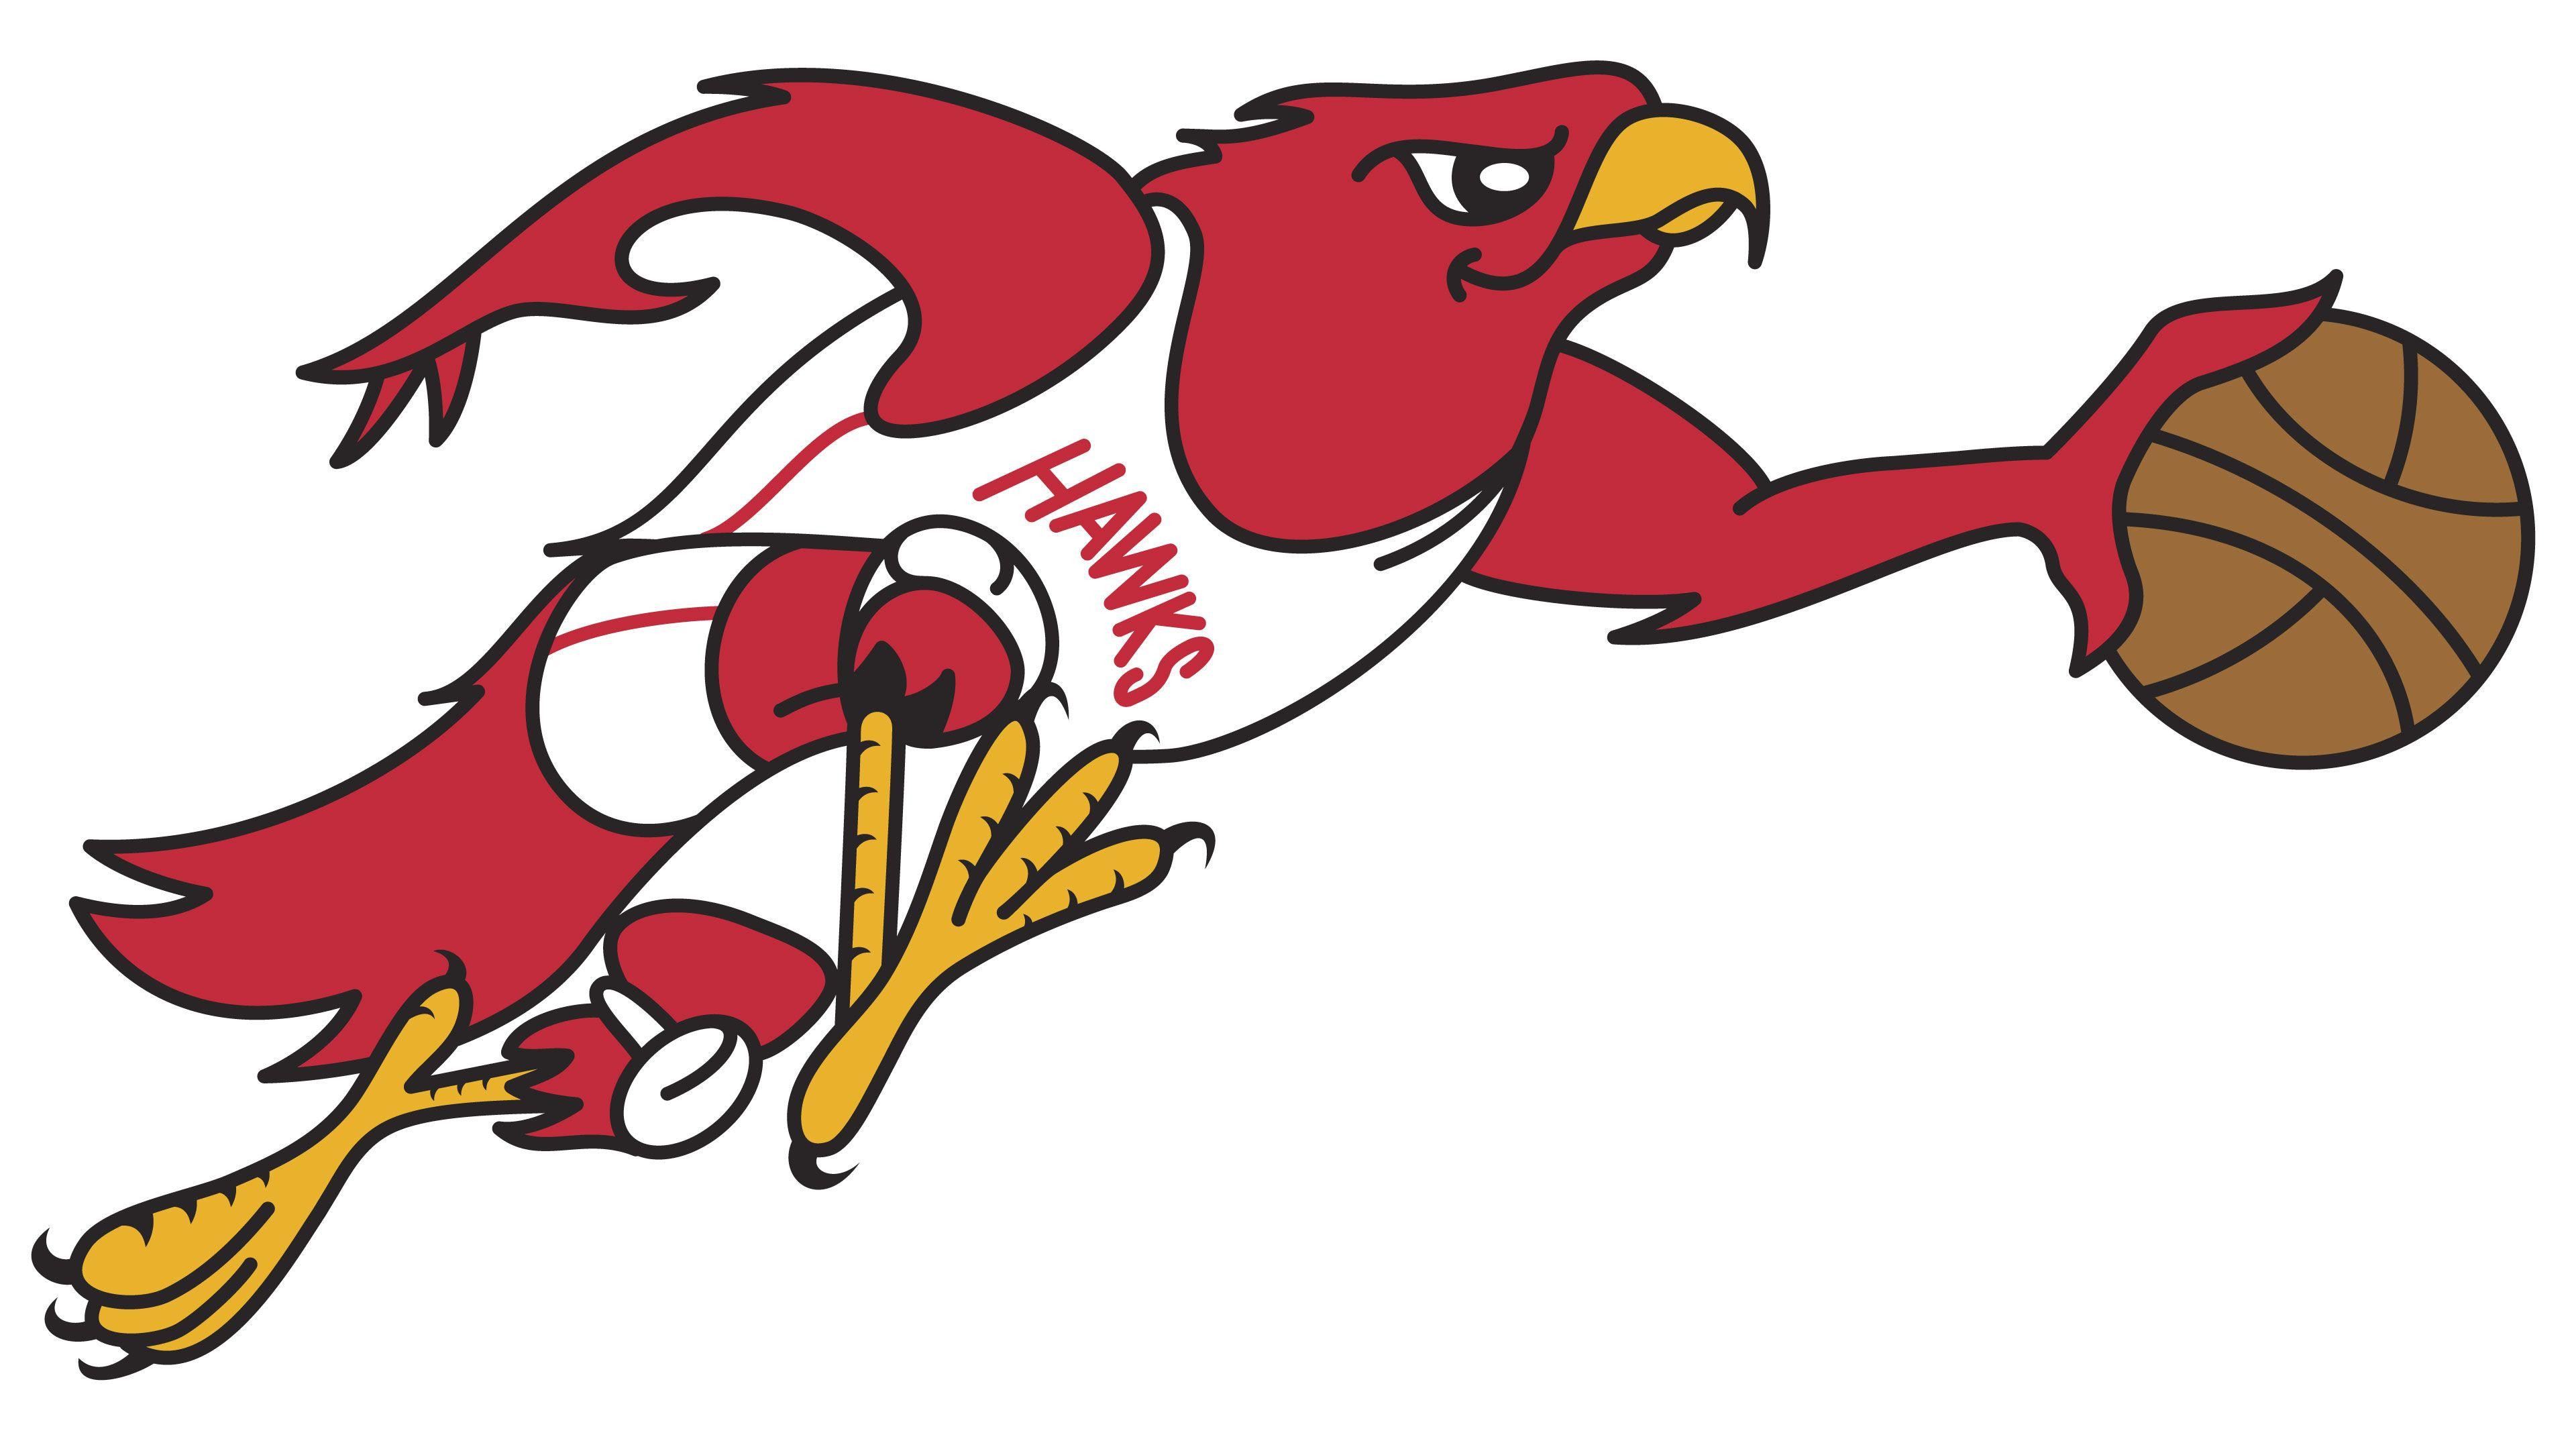 ATL Hawks Logo - Atlanta Hawks Logo History of the Team Name and emblem